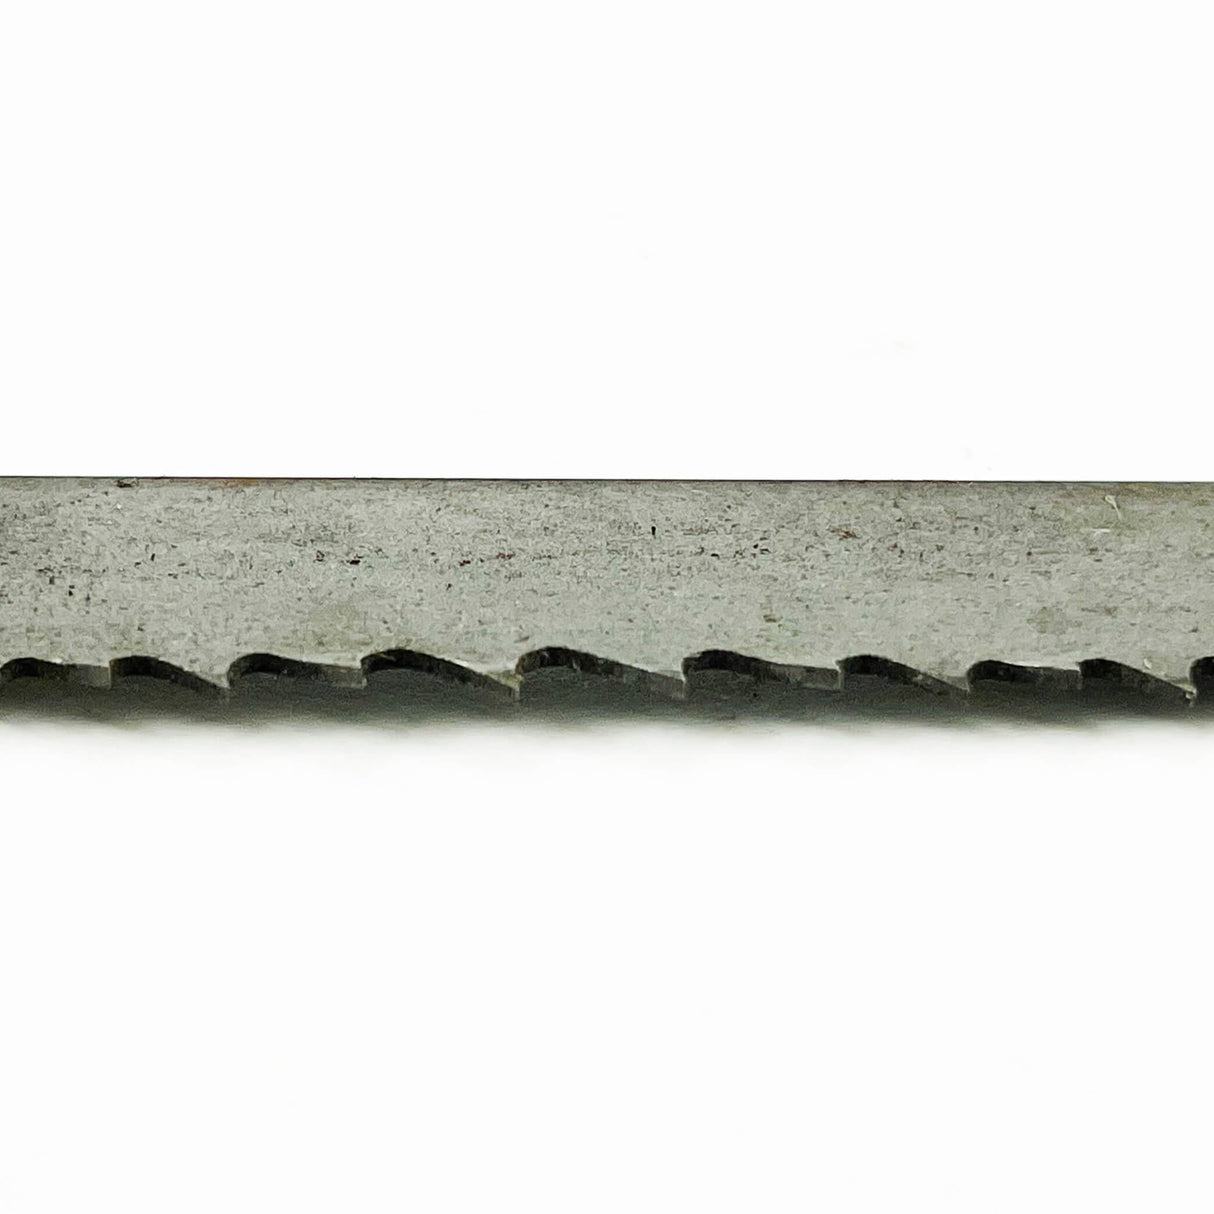 1680mm Long x 13mm Wide COBALT M42 Bi-Metal Band Saw - Pack of 2 Blades